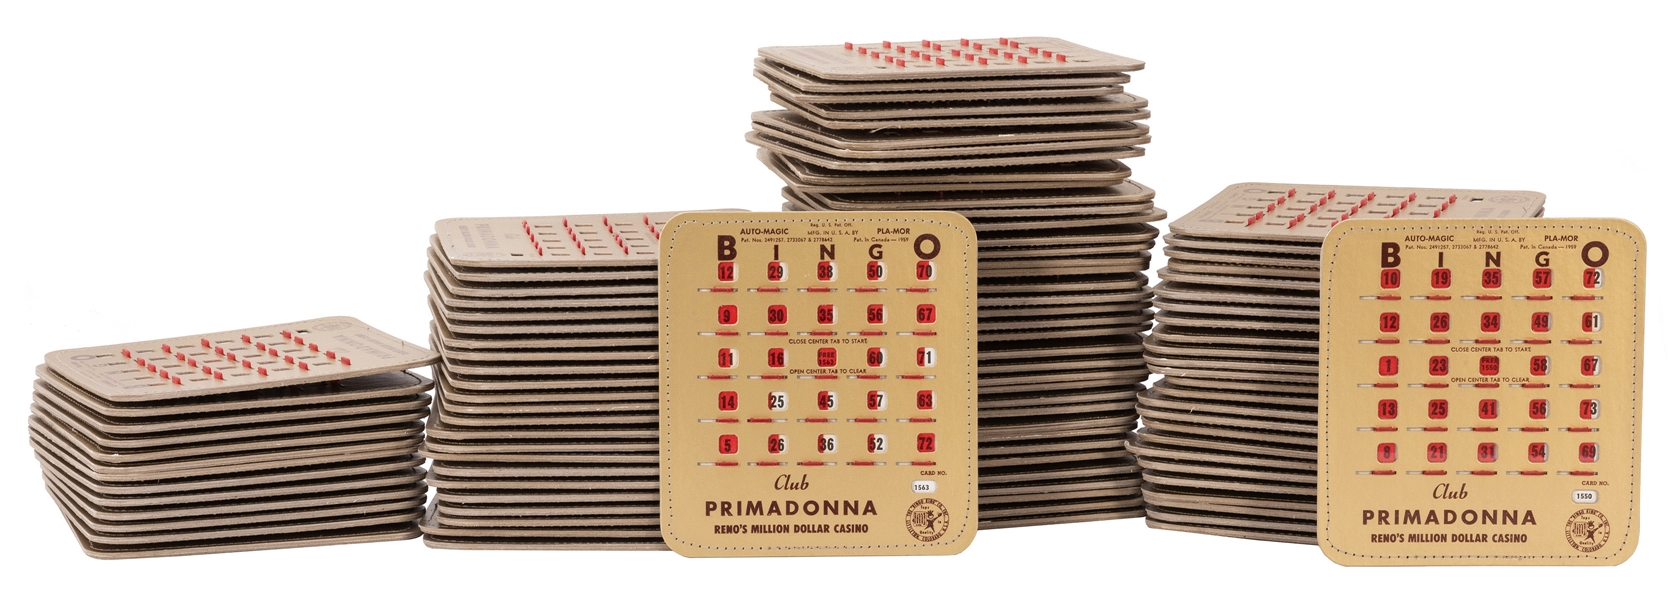  Box of Club Primadonna “Bingo King” Cards. 1959. New old st...